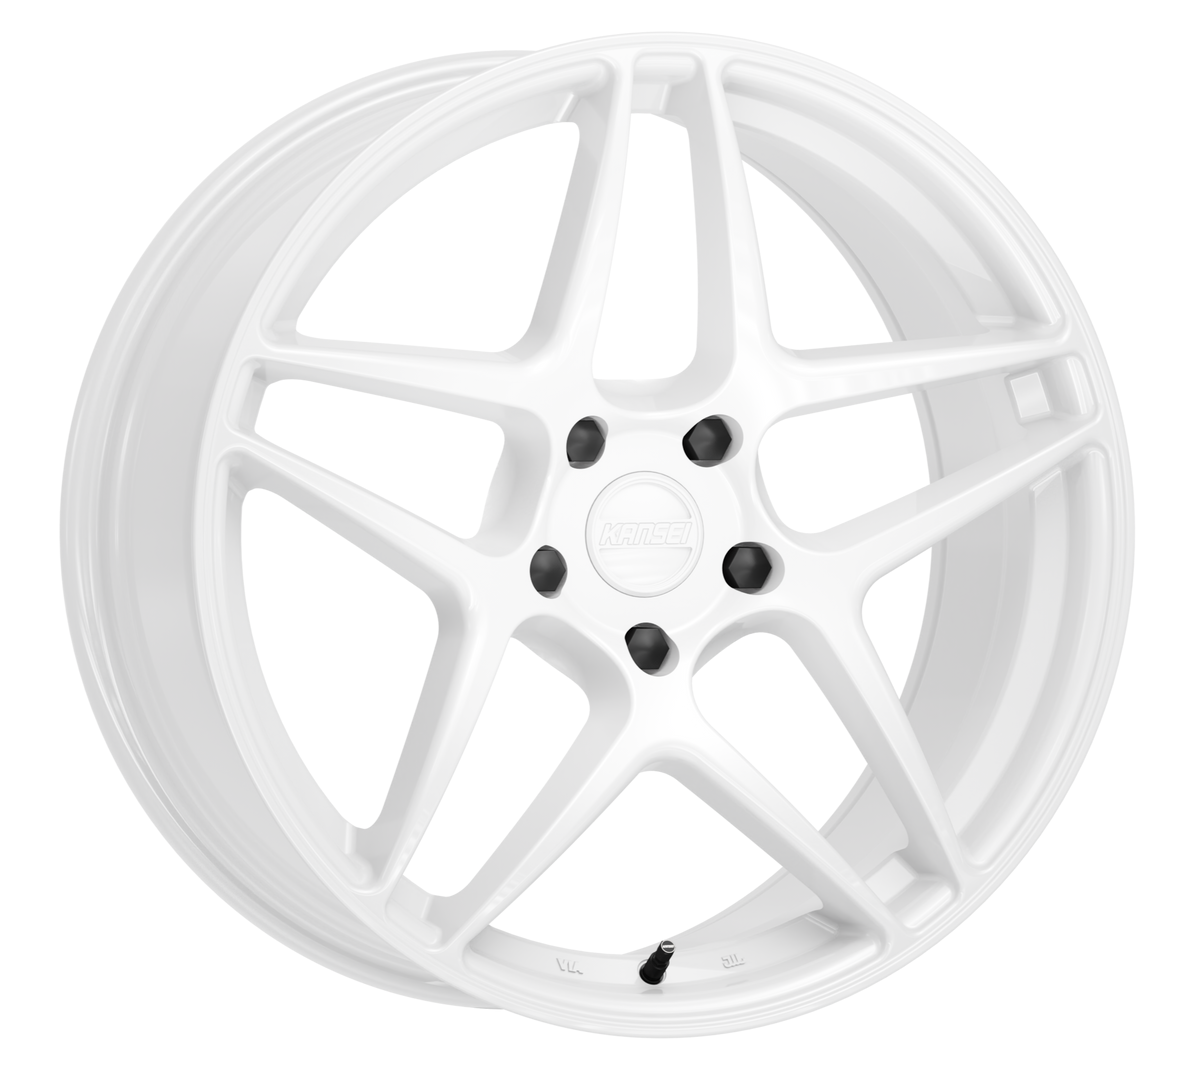 K15W ASTRO Wheel, Size: 18" x 9.50", Bolt Pattern: 5 x 120 mm, Backspace: 6.63" [Finish: Gloss White]